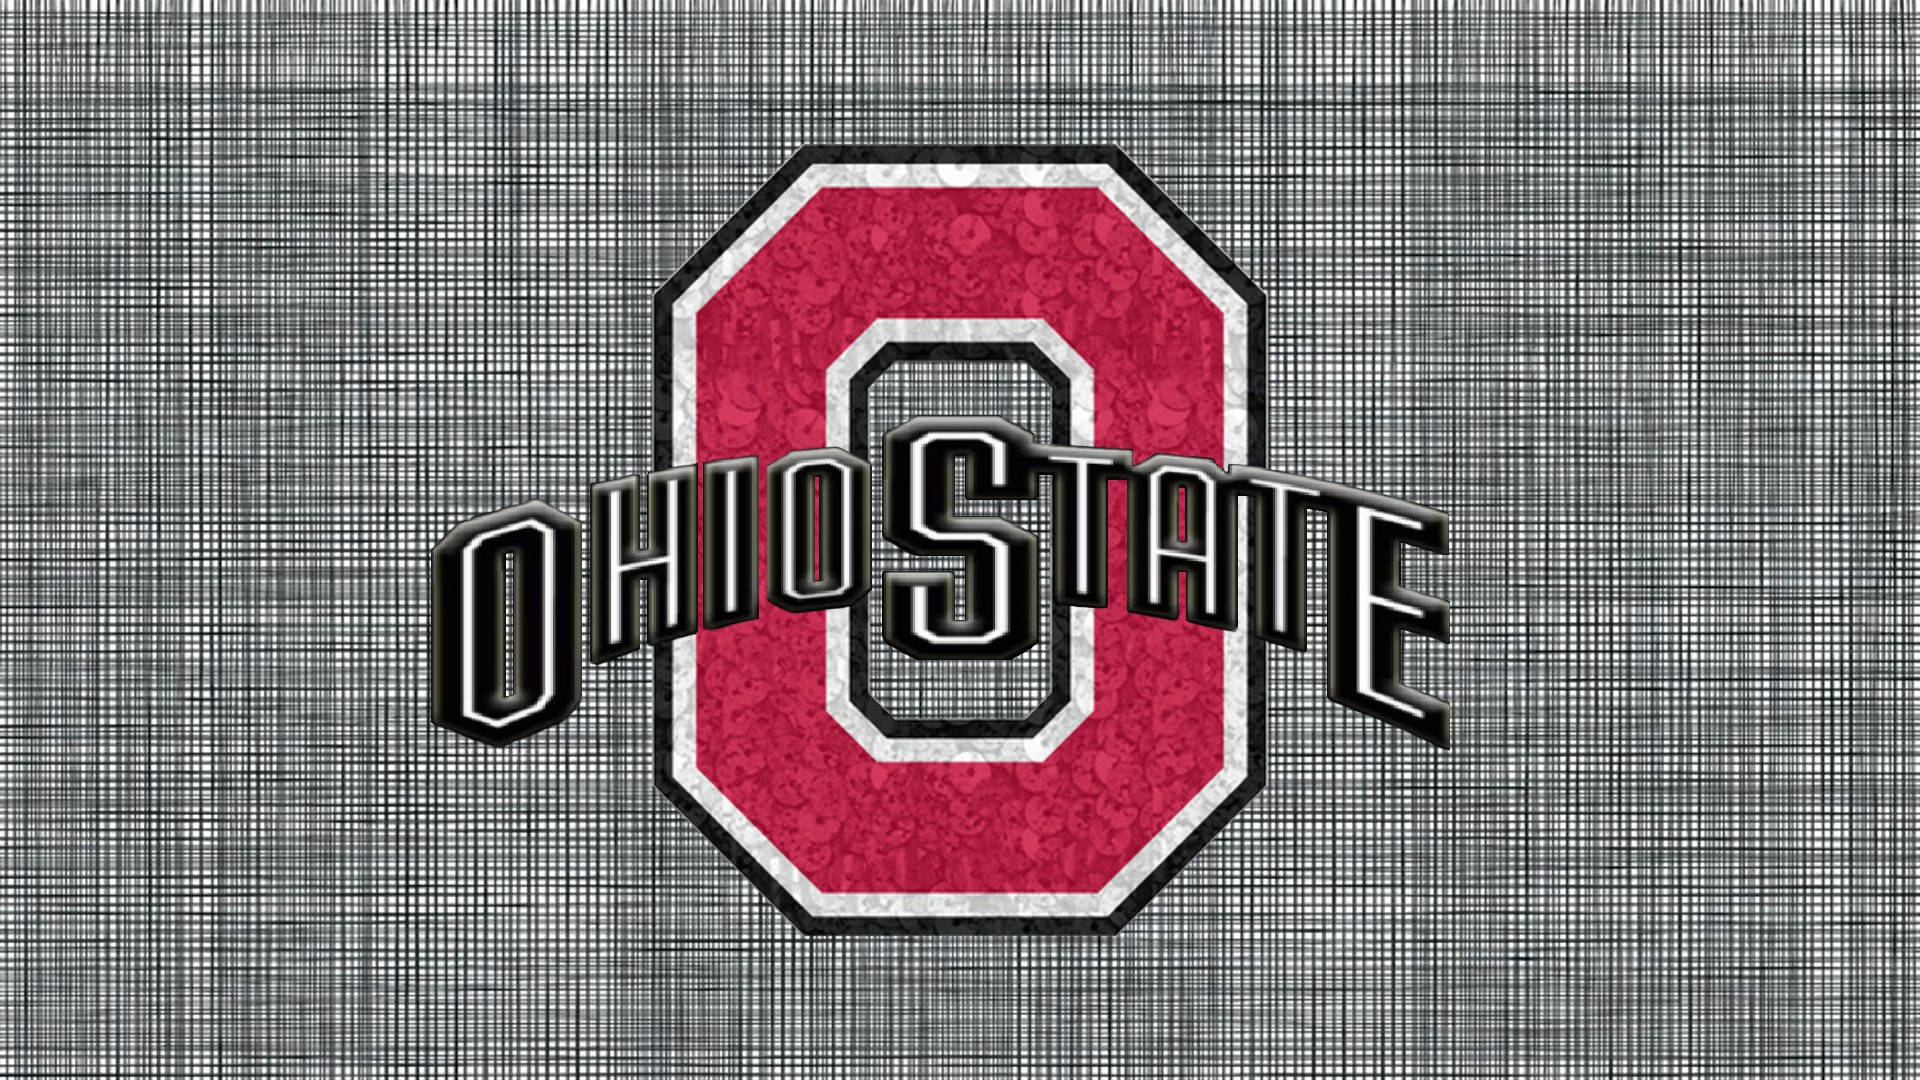 Ohio State University Textile Pattern Background